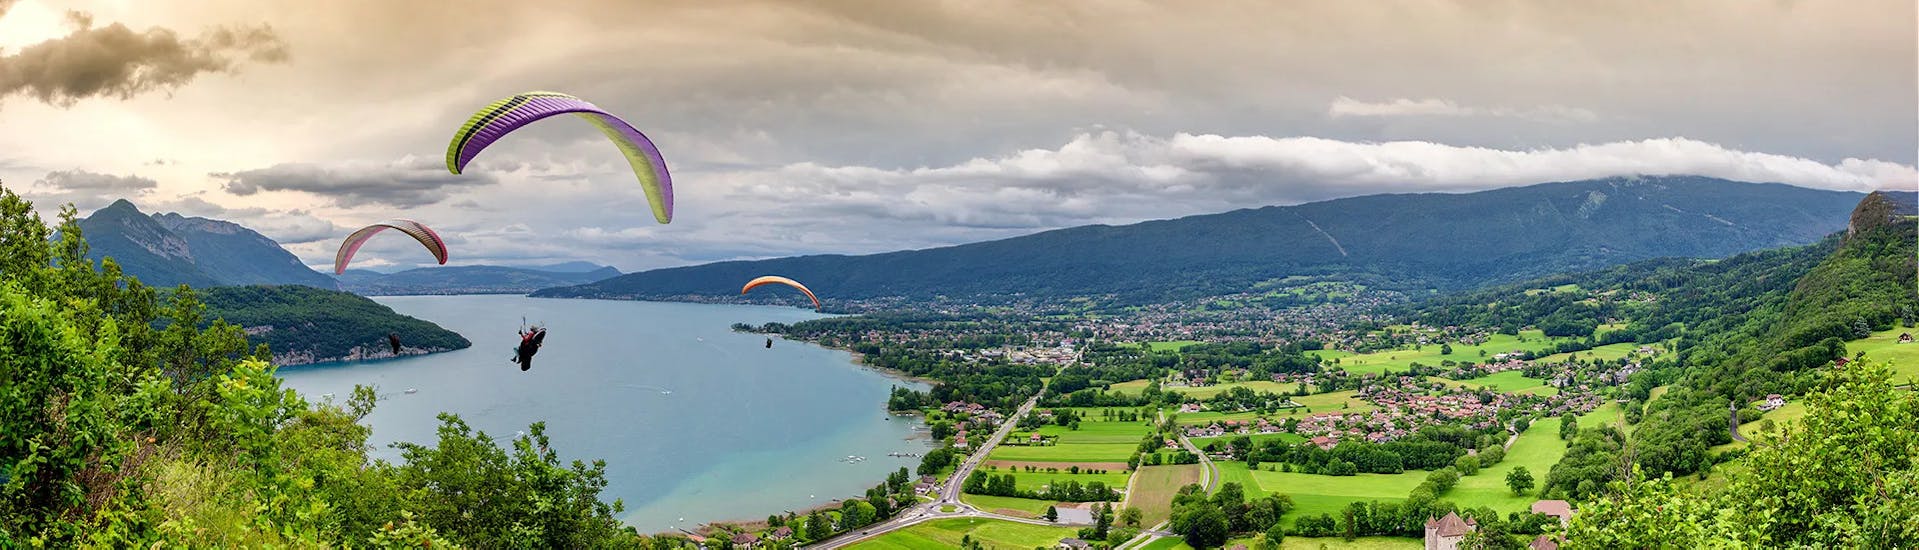 Tandem-Paragliding über dem Lac d'Annecy - Akrobatikflug.